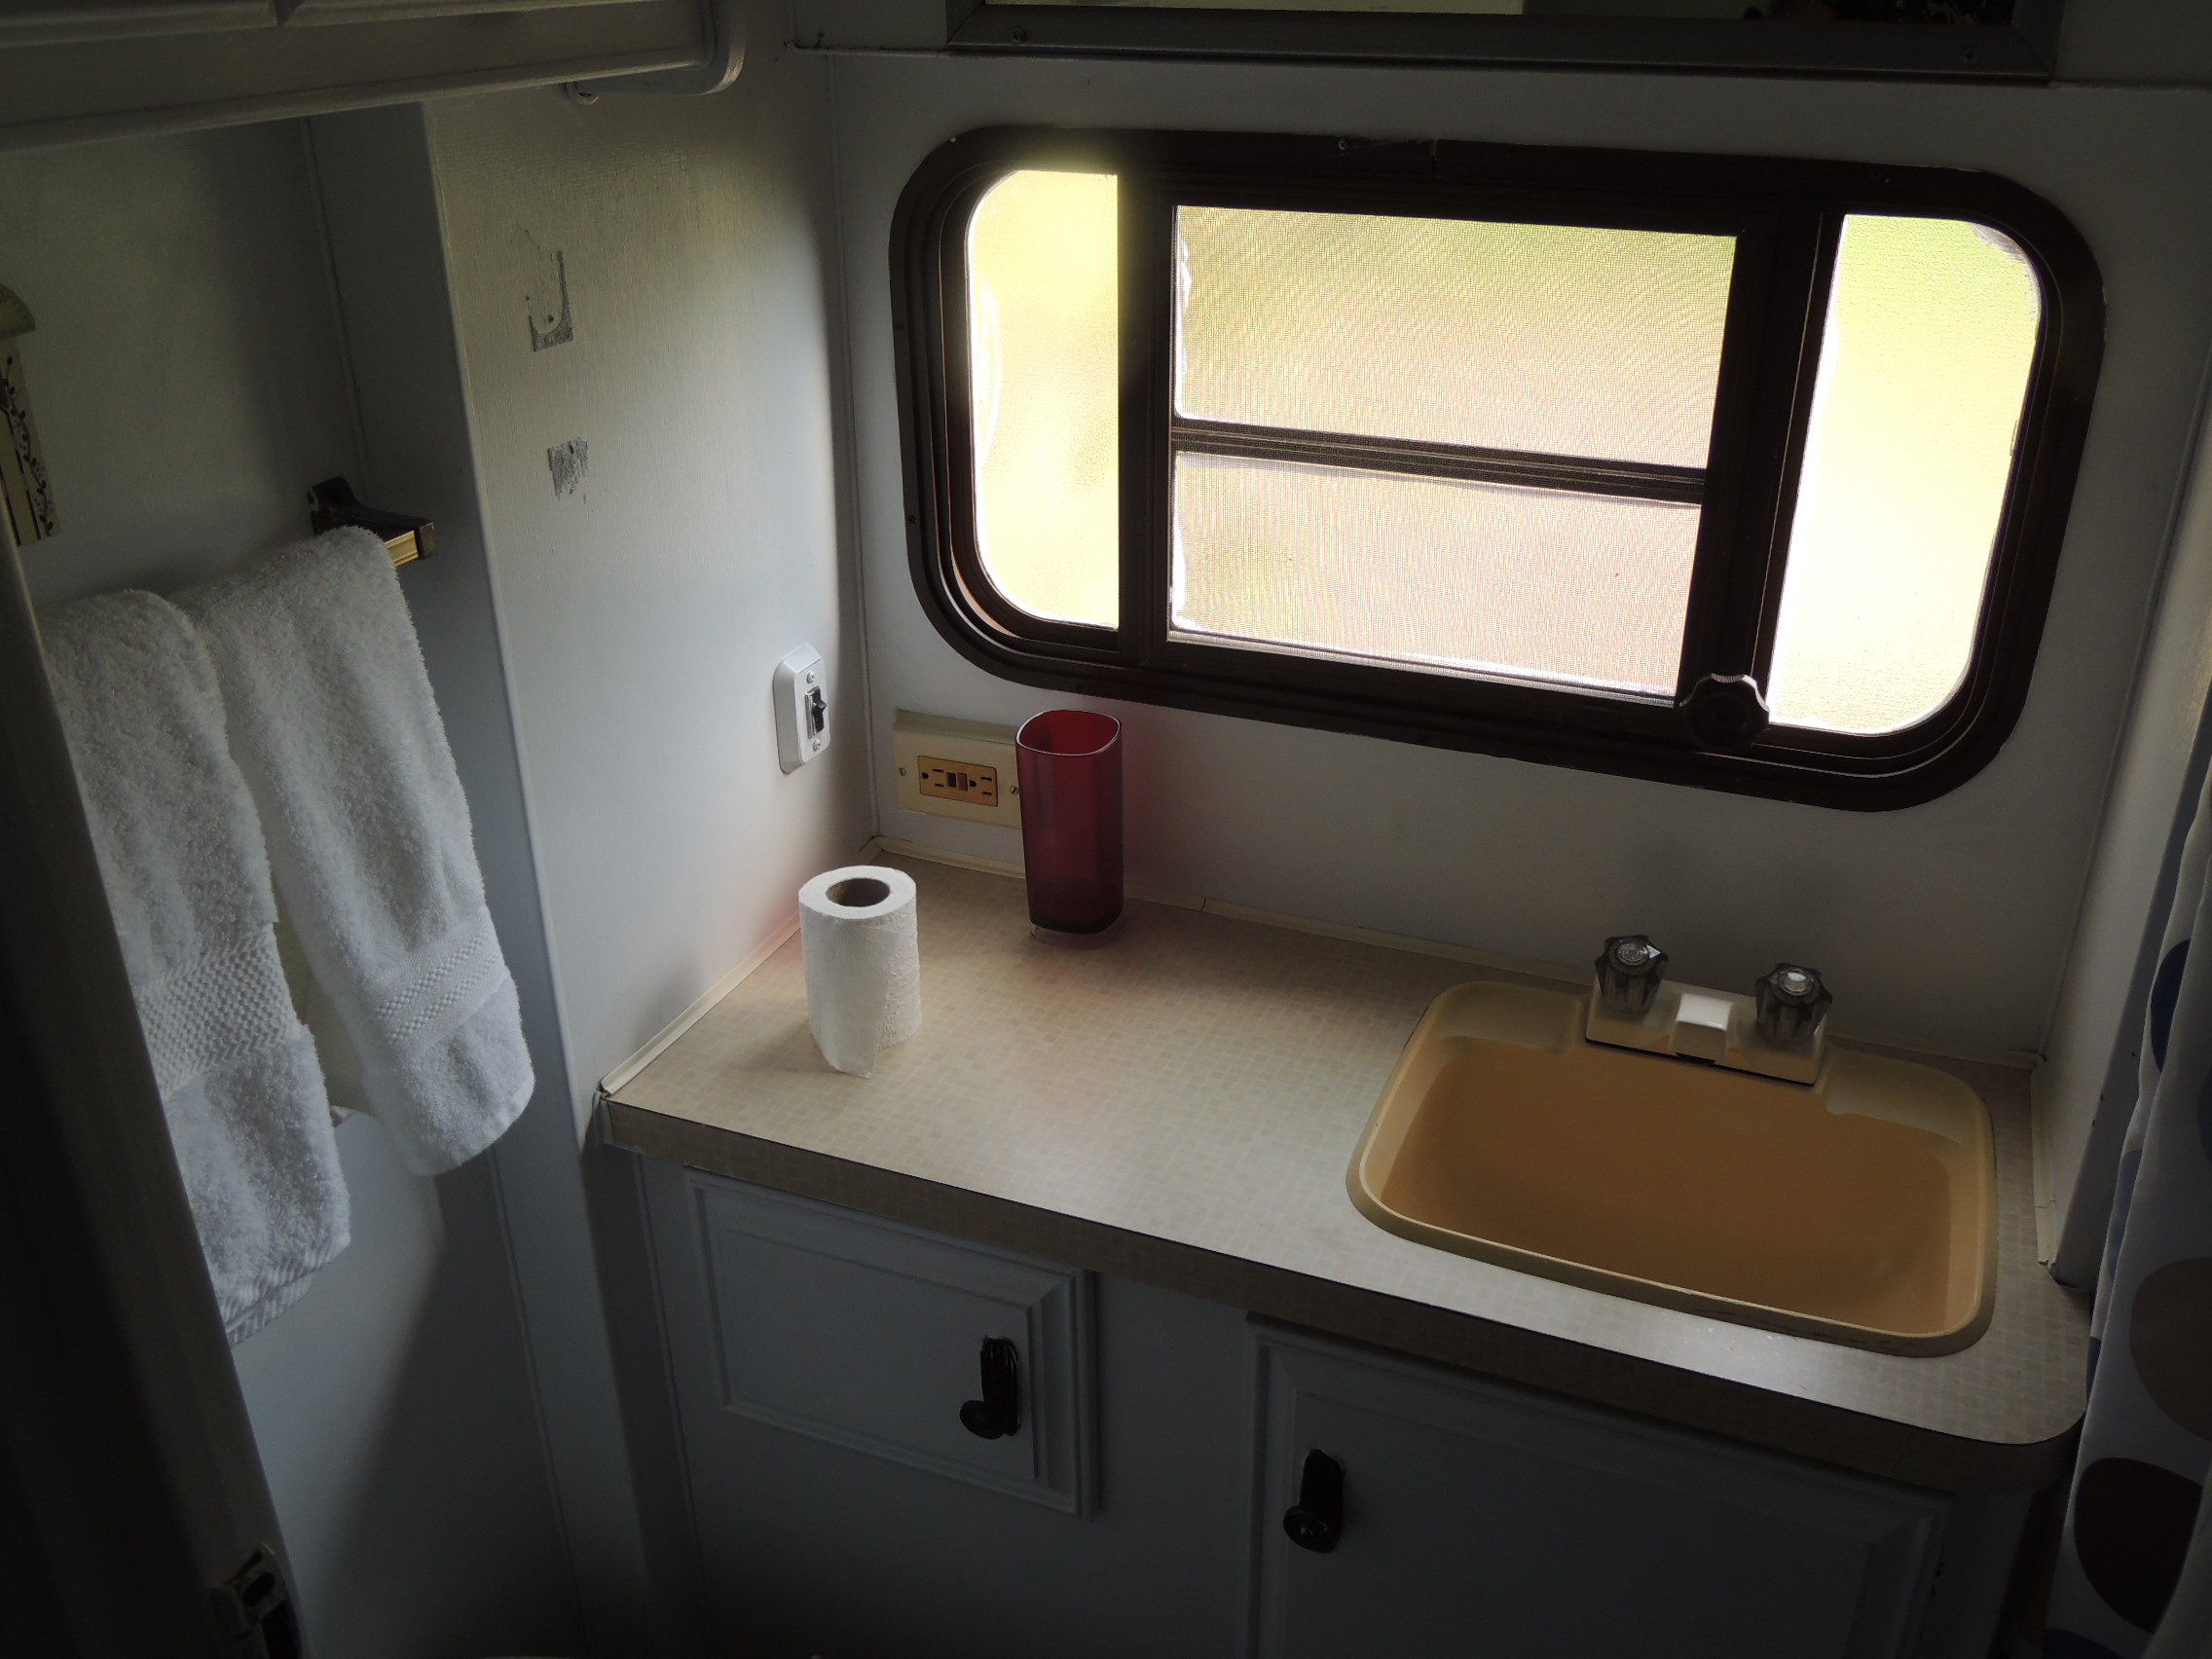 Retro trailer interior view of the bathroom vanity